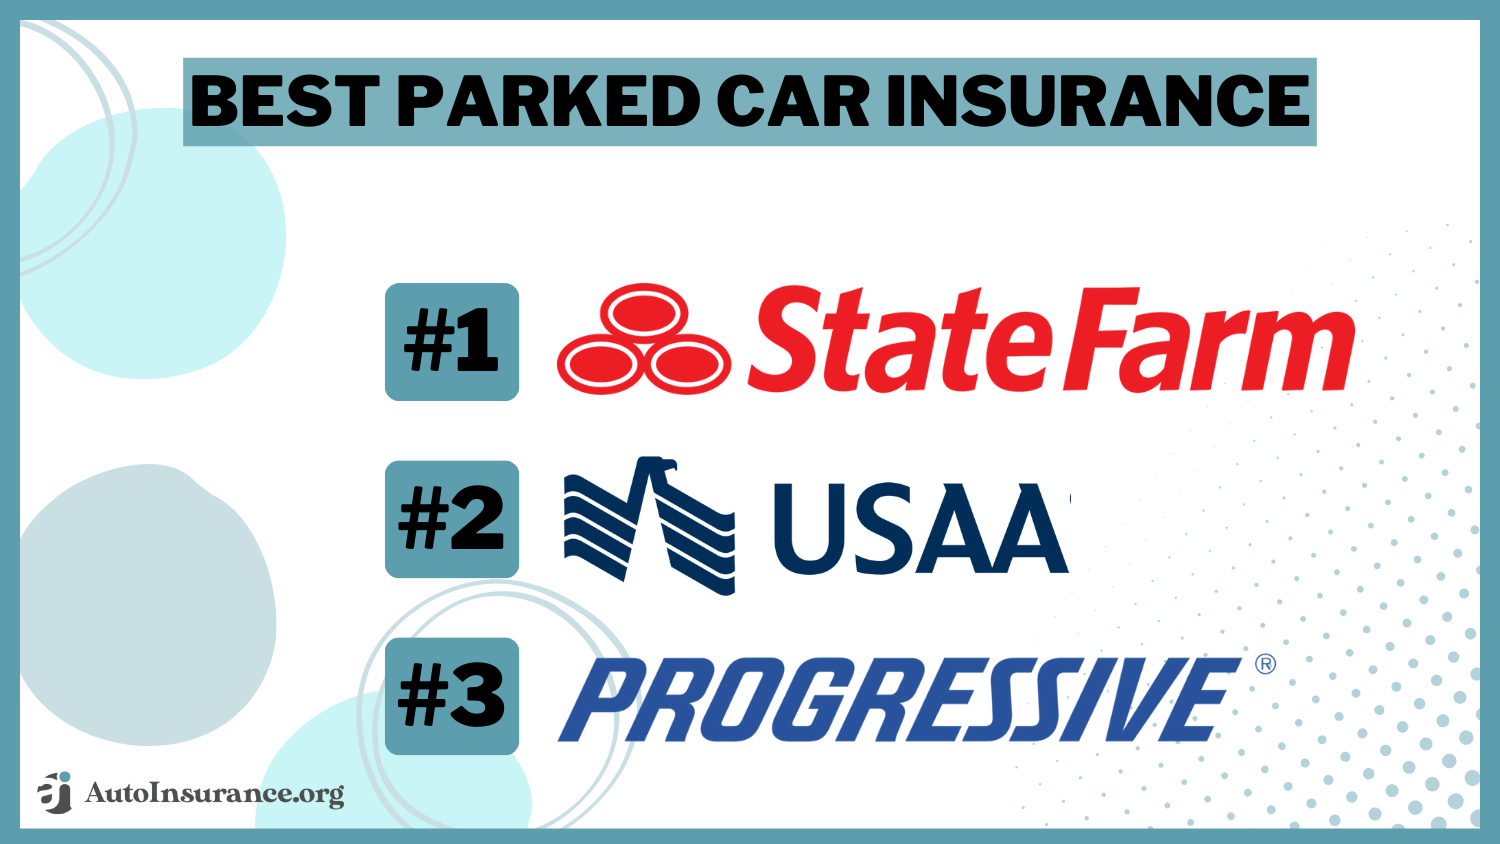 Best Parked Car Insurance - State Farm, USAA, Progressive